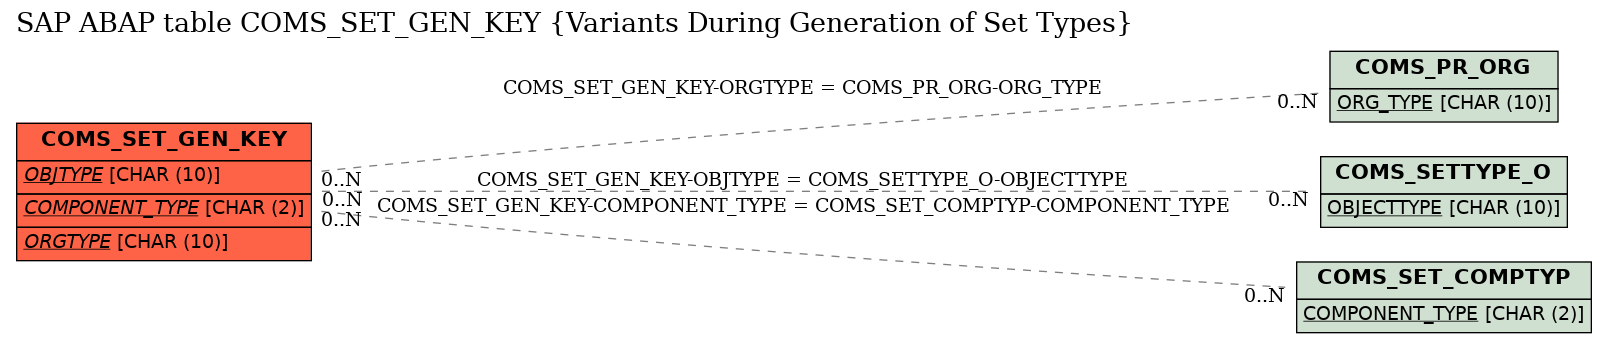 E-R Diagram for table COMS_SET_GEN_KEY (Variants During Generation of Set Types)